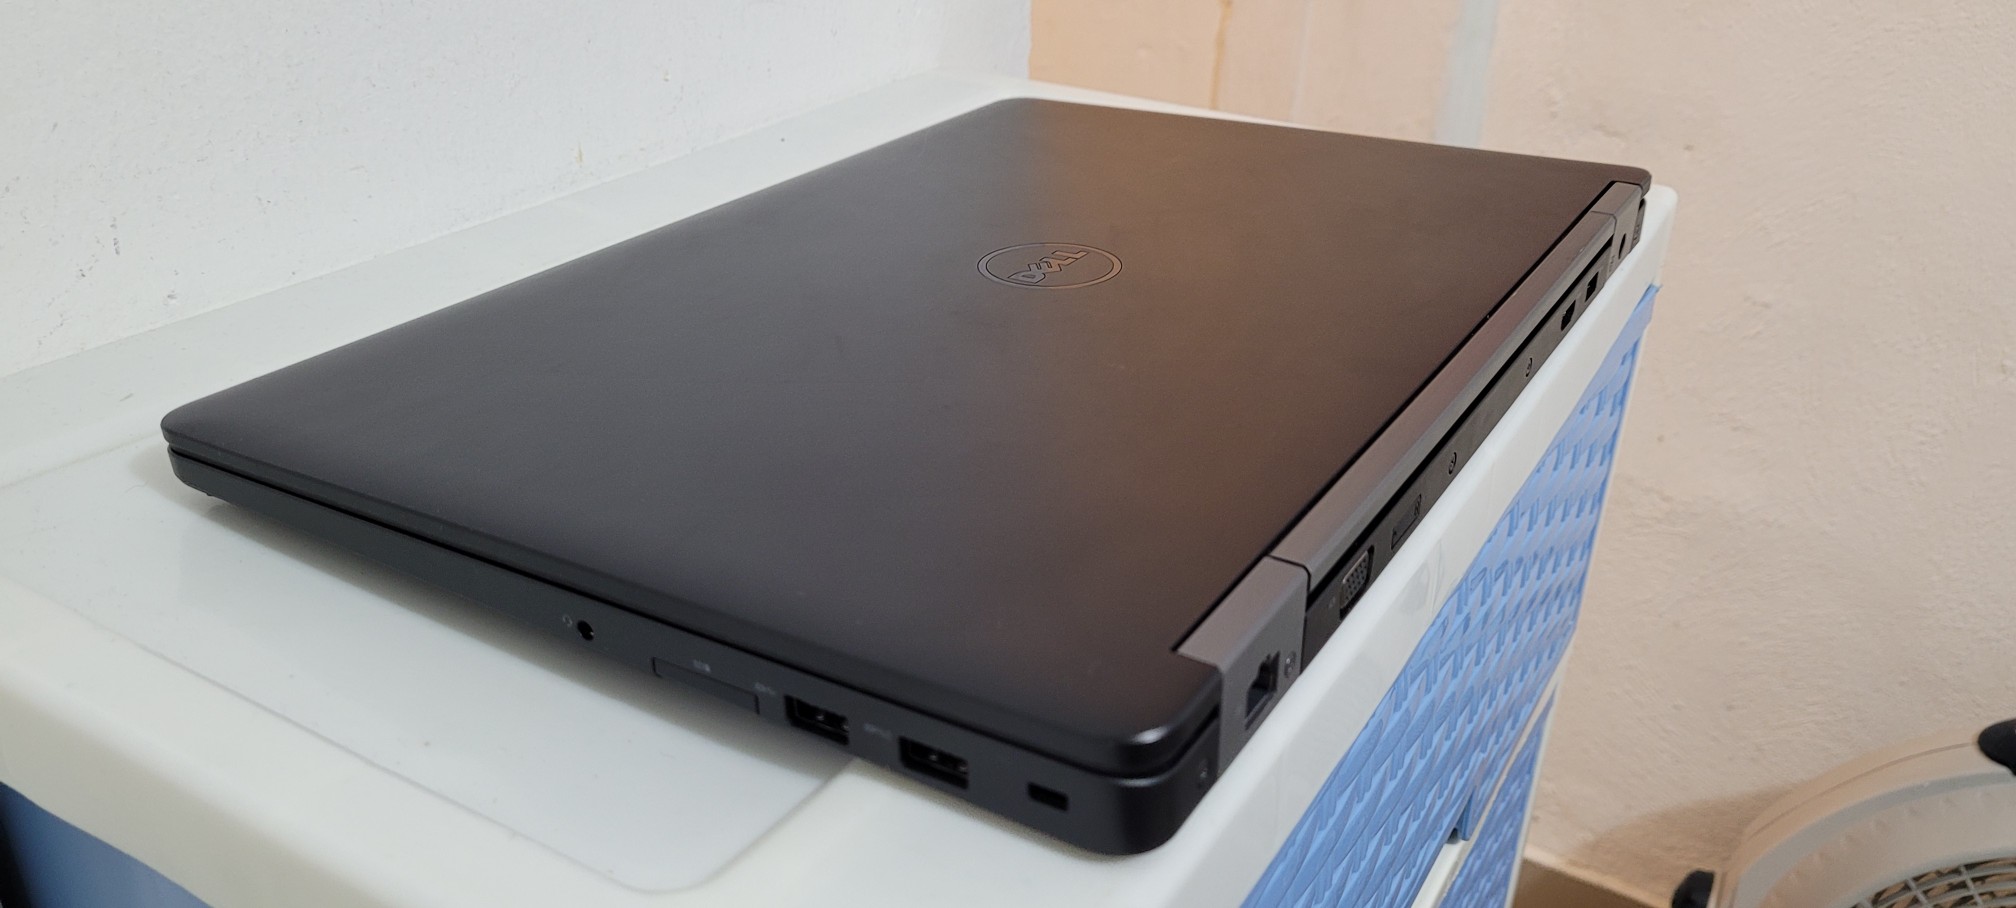 computadoras y laptops - Dell 5570 17 Pulg Core i7 6ta Ram 16gb ddr4 SSD 512GB Video 8gb full 2